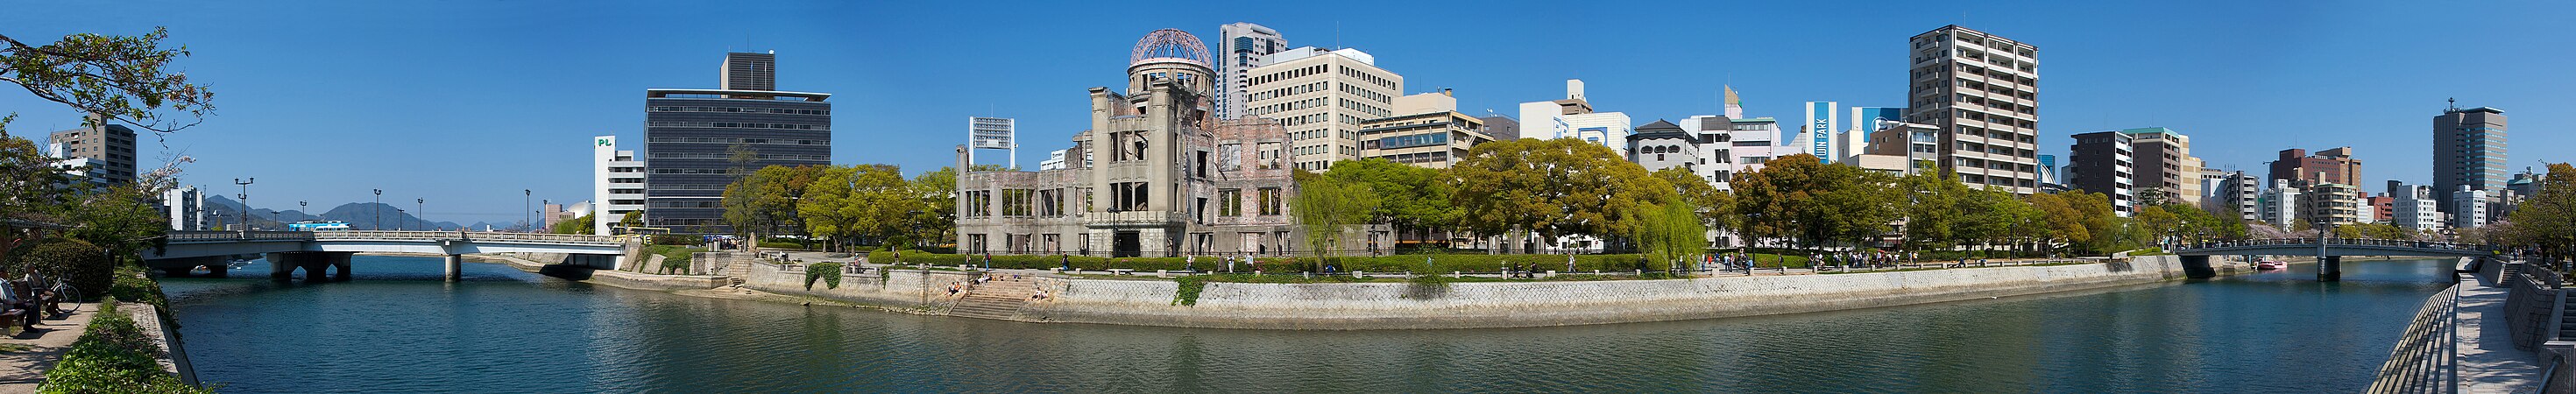 Hiroshima Peace Memorial, by Deanpemberton (edited by Torsodog)